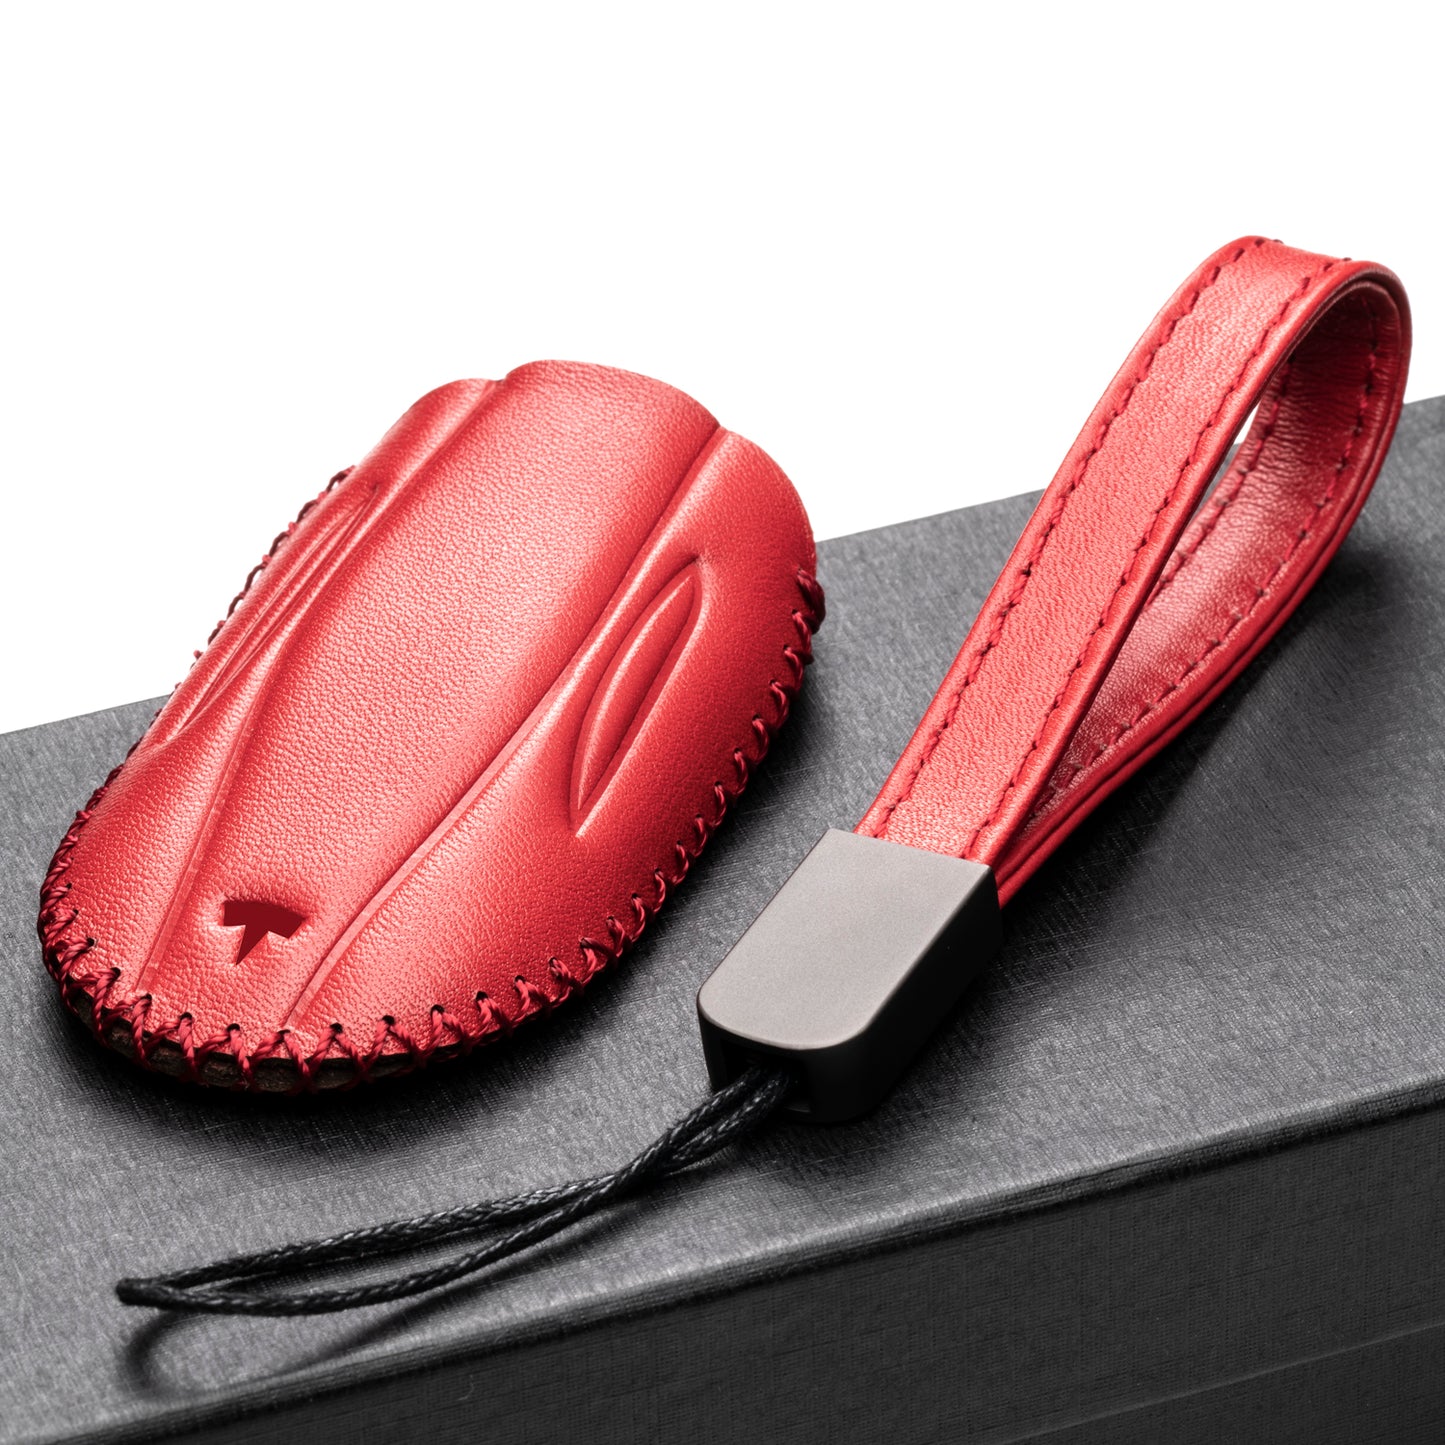 Vitodeco Genuine Leather Smart Key Fob Compatible for Tesla Model S, Model 3